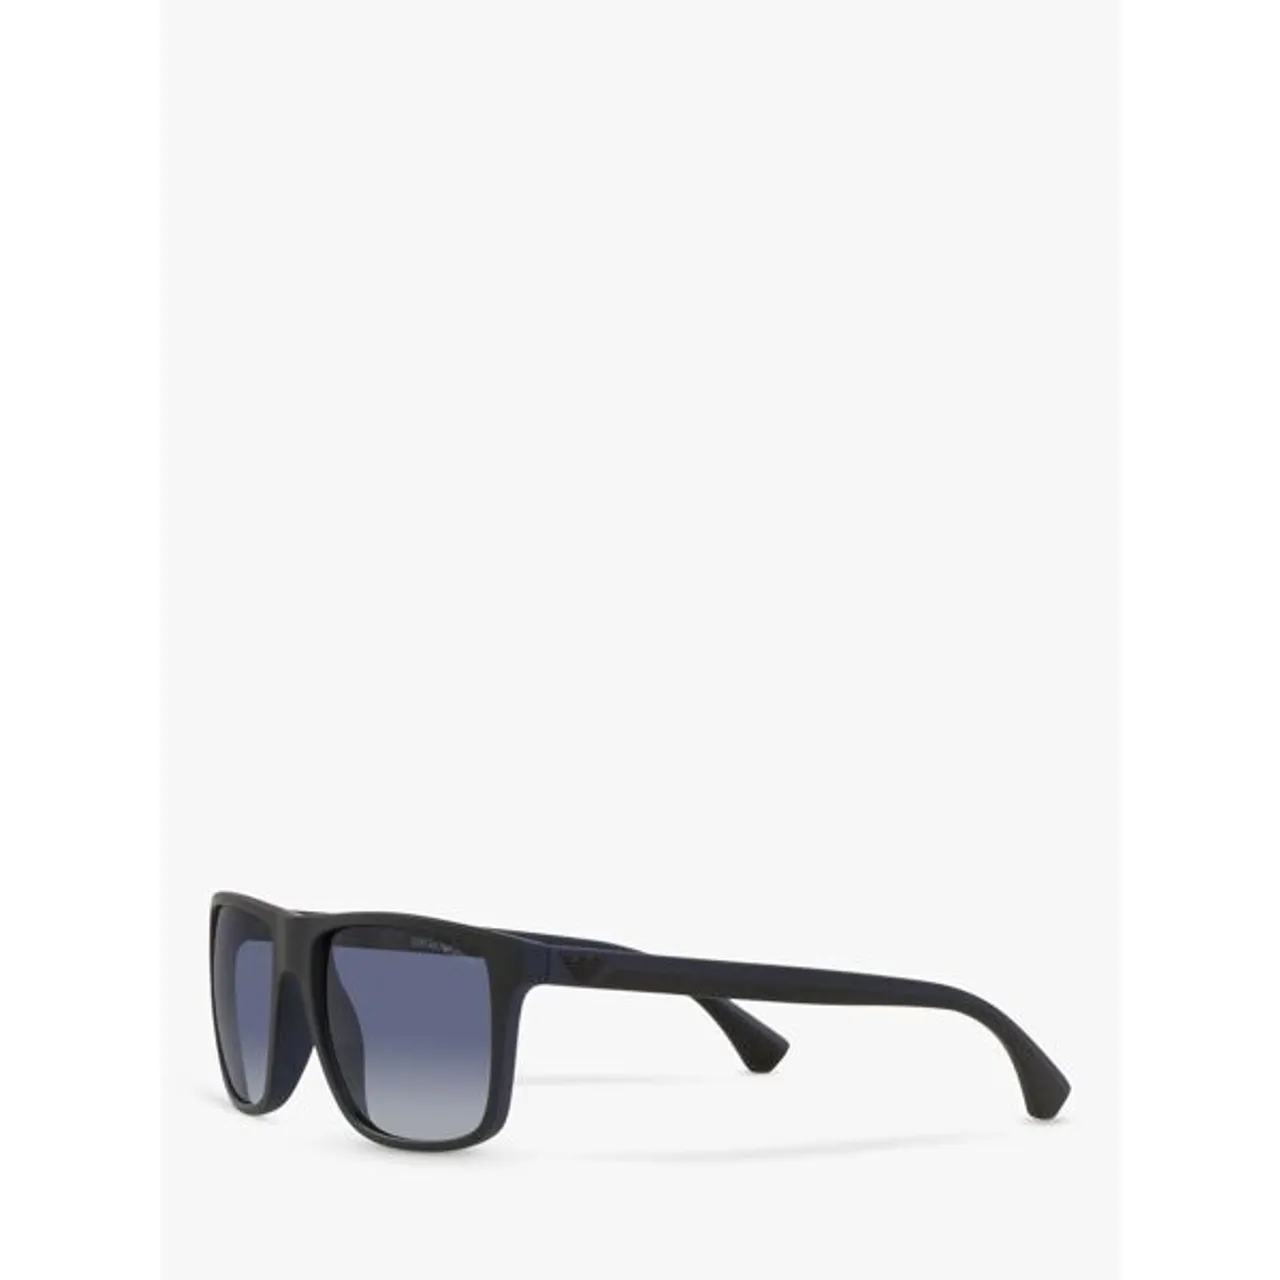 Emporio Armani Men's Square Sunglasses, Black/Blue Gradient - Black/Blue Gradient - Male